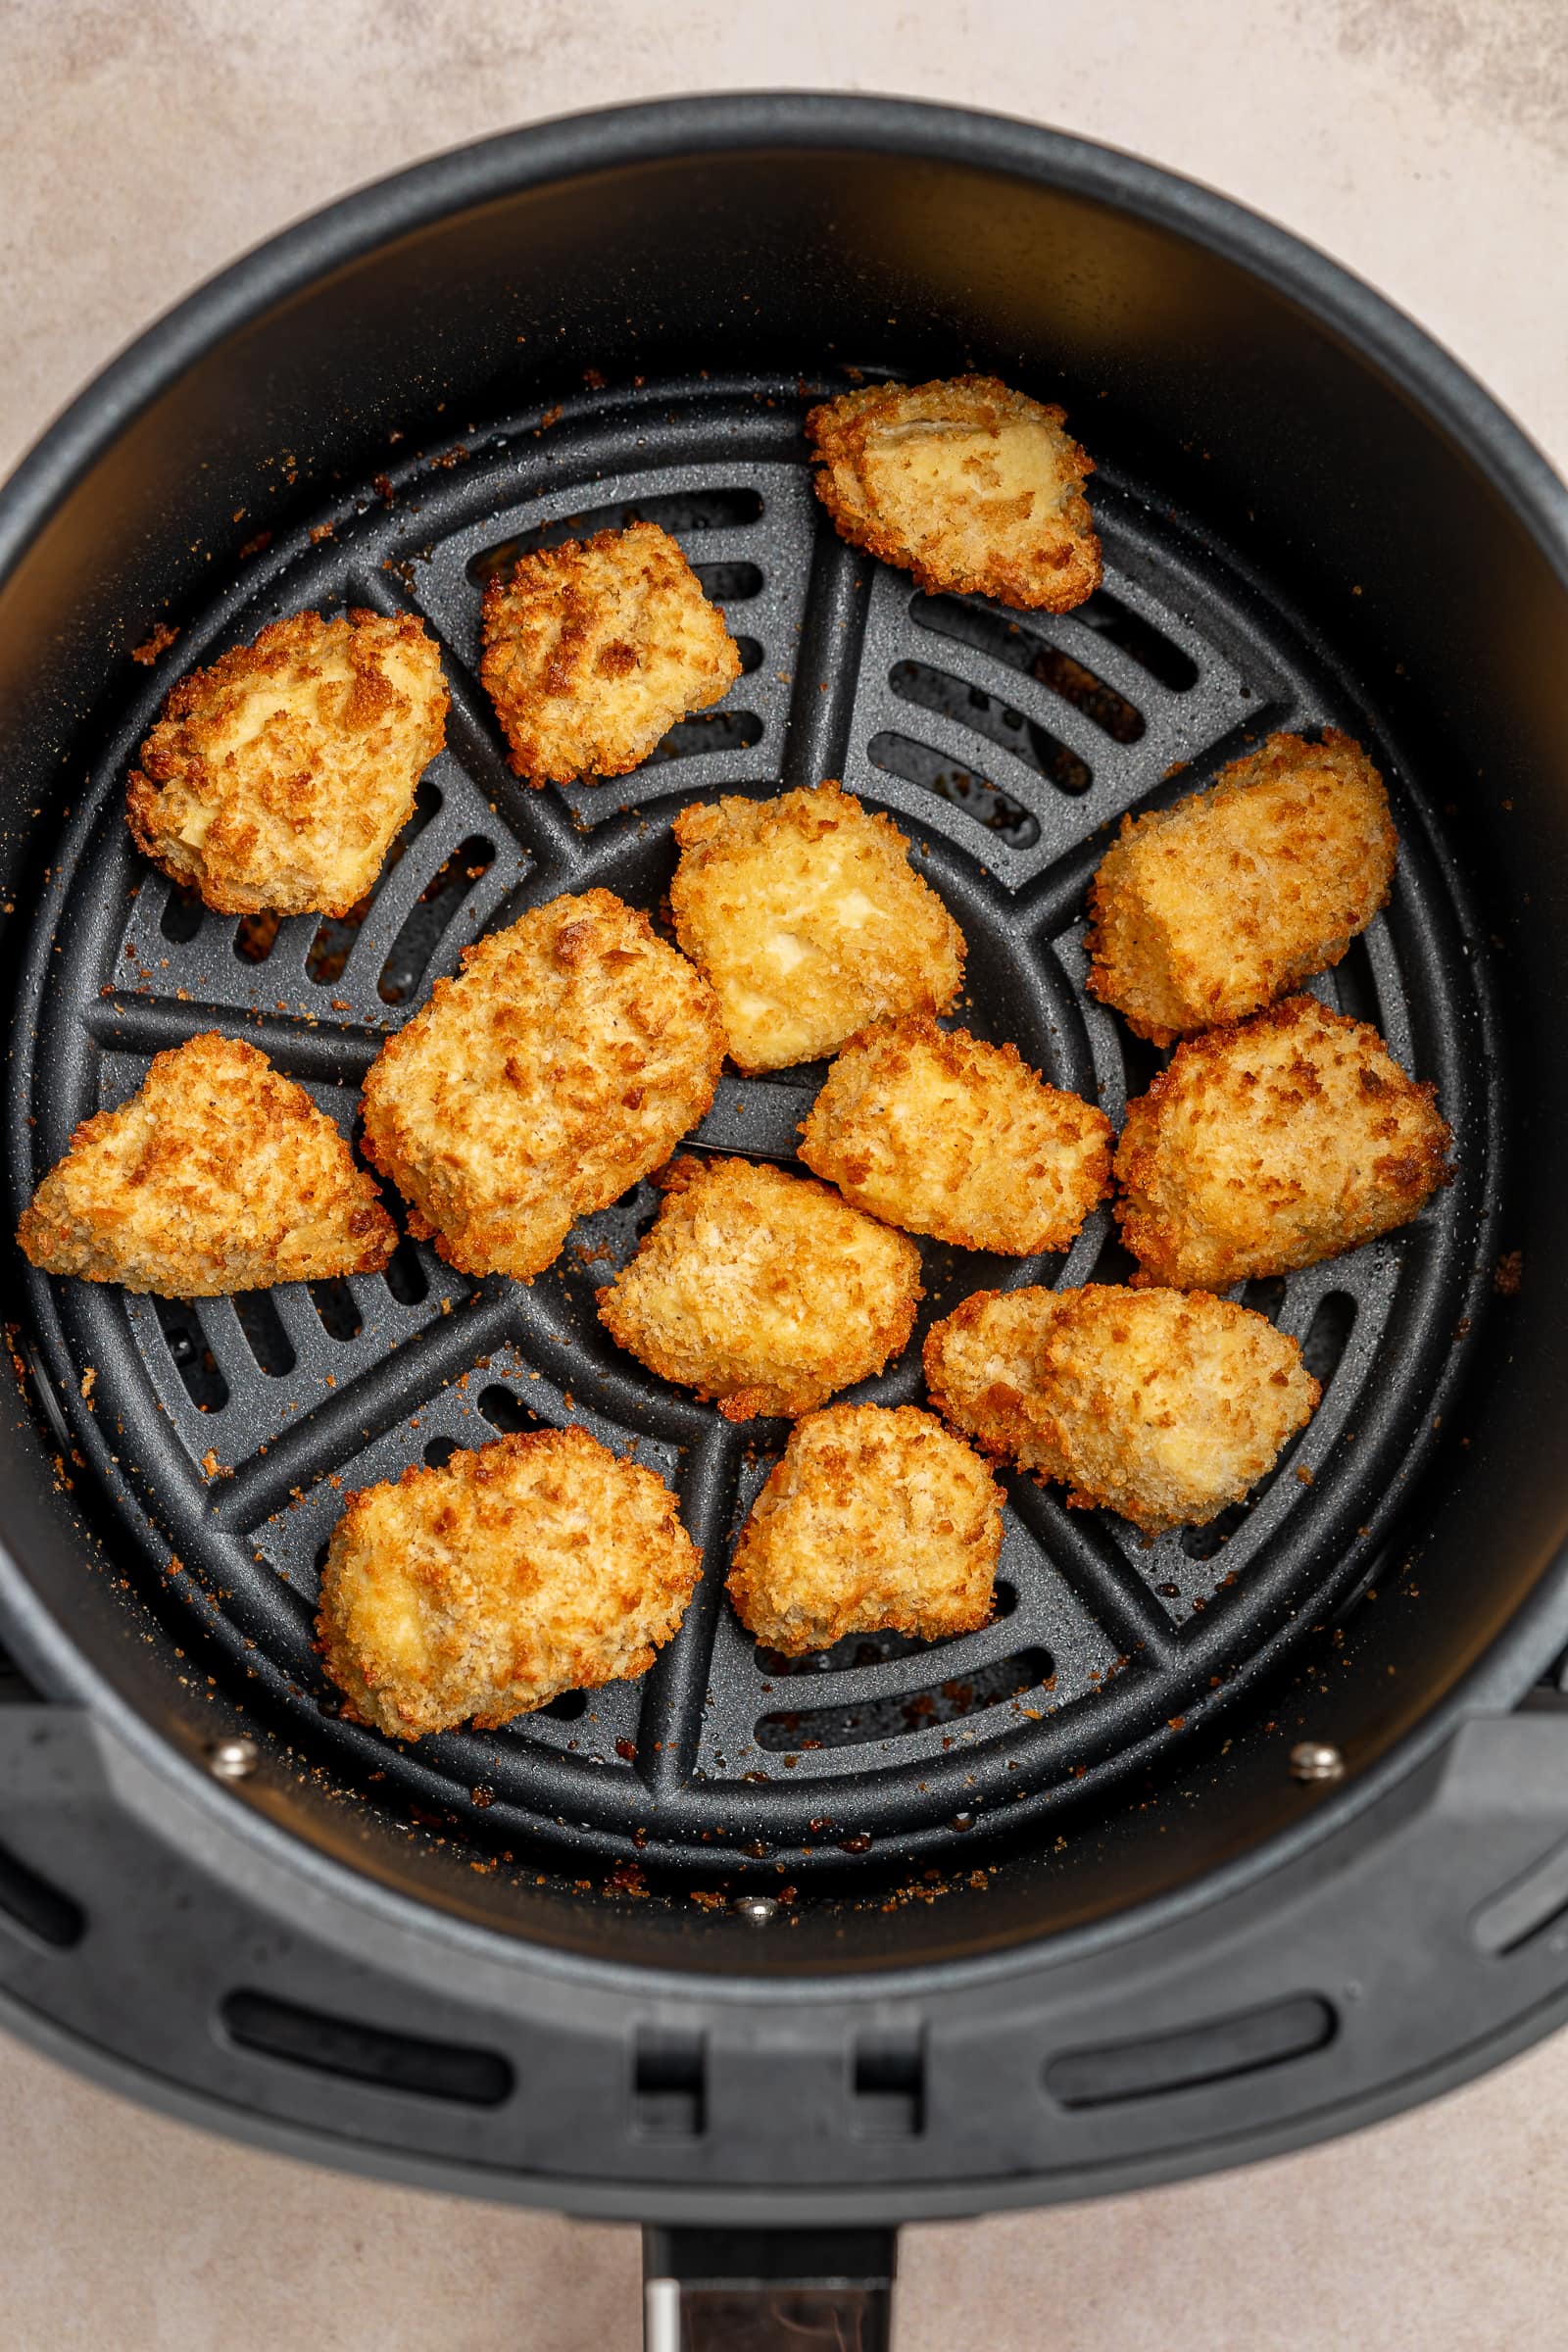 Crispy, golden tofu in an air fryer basket.